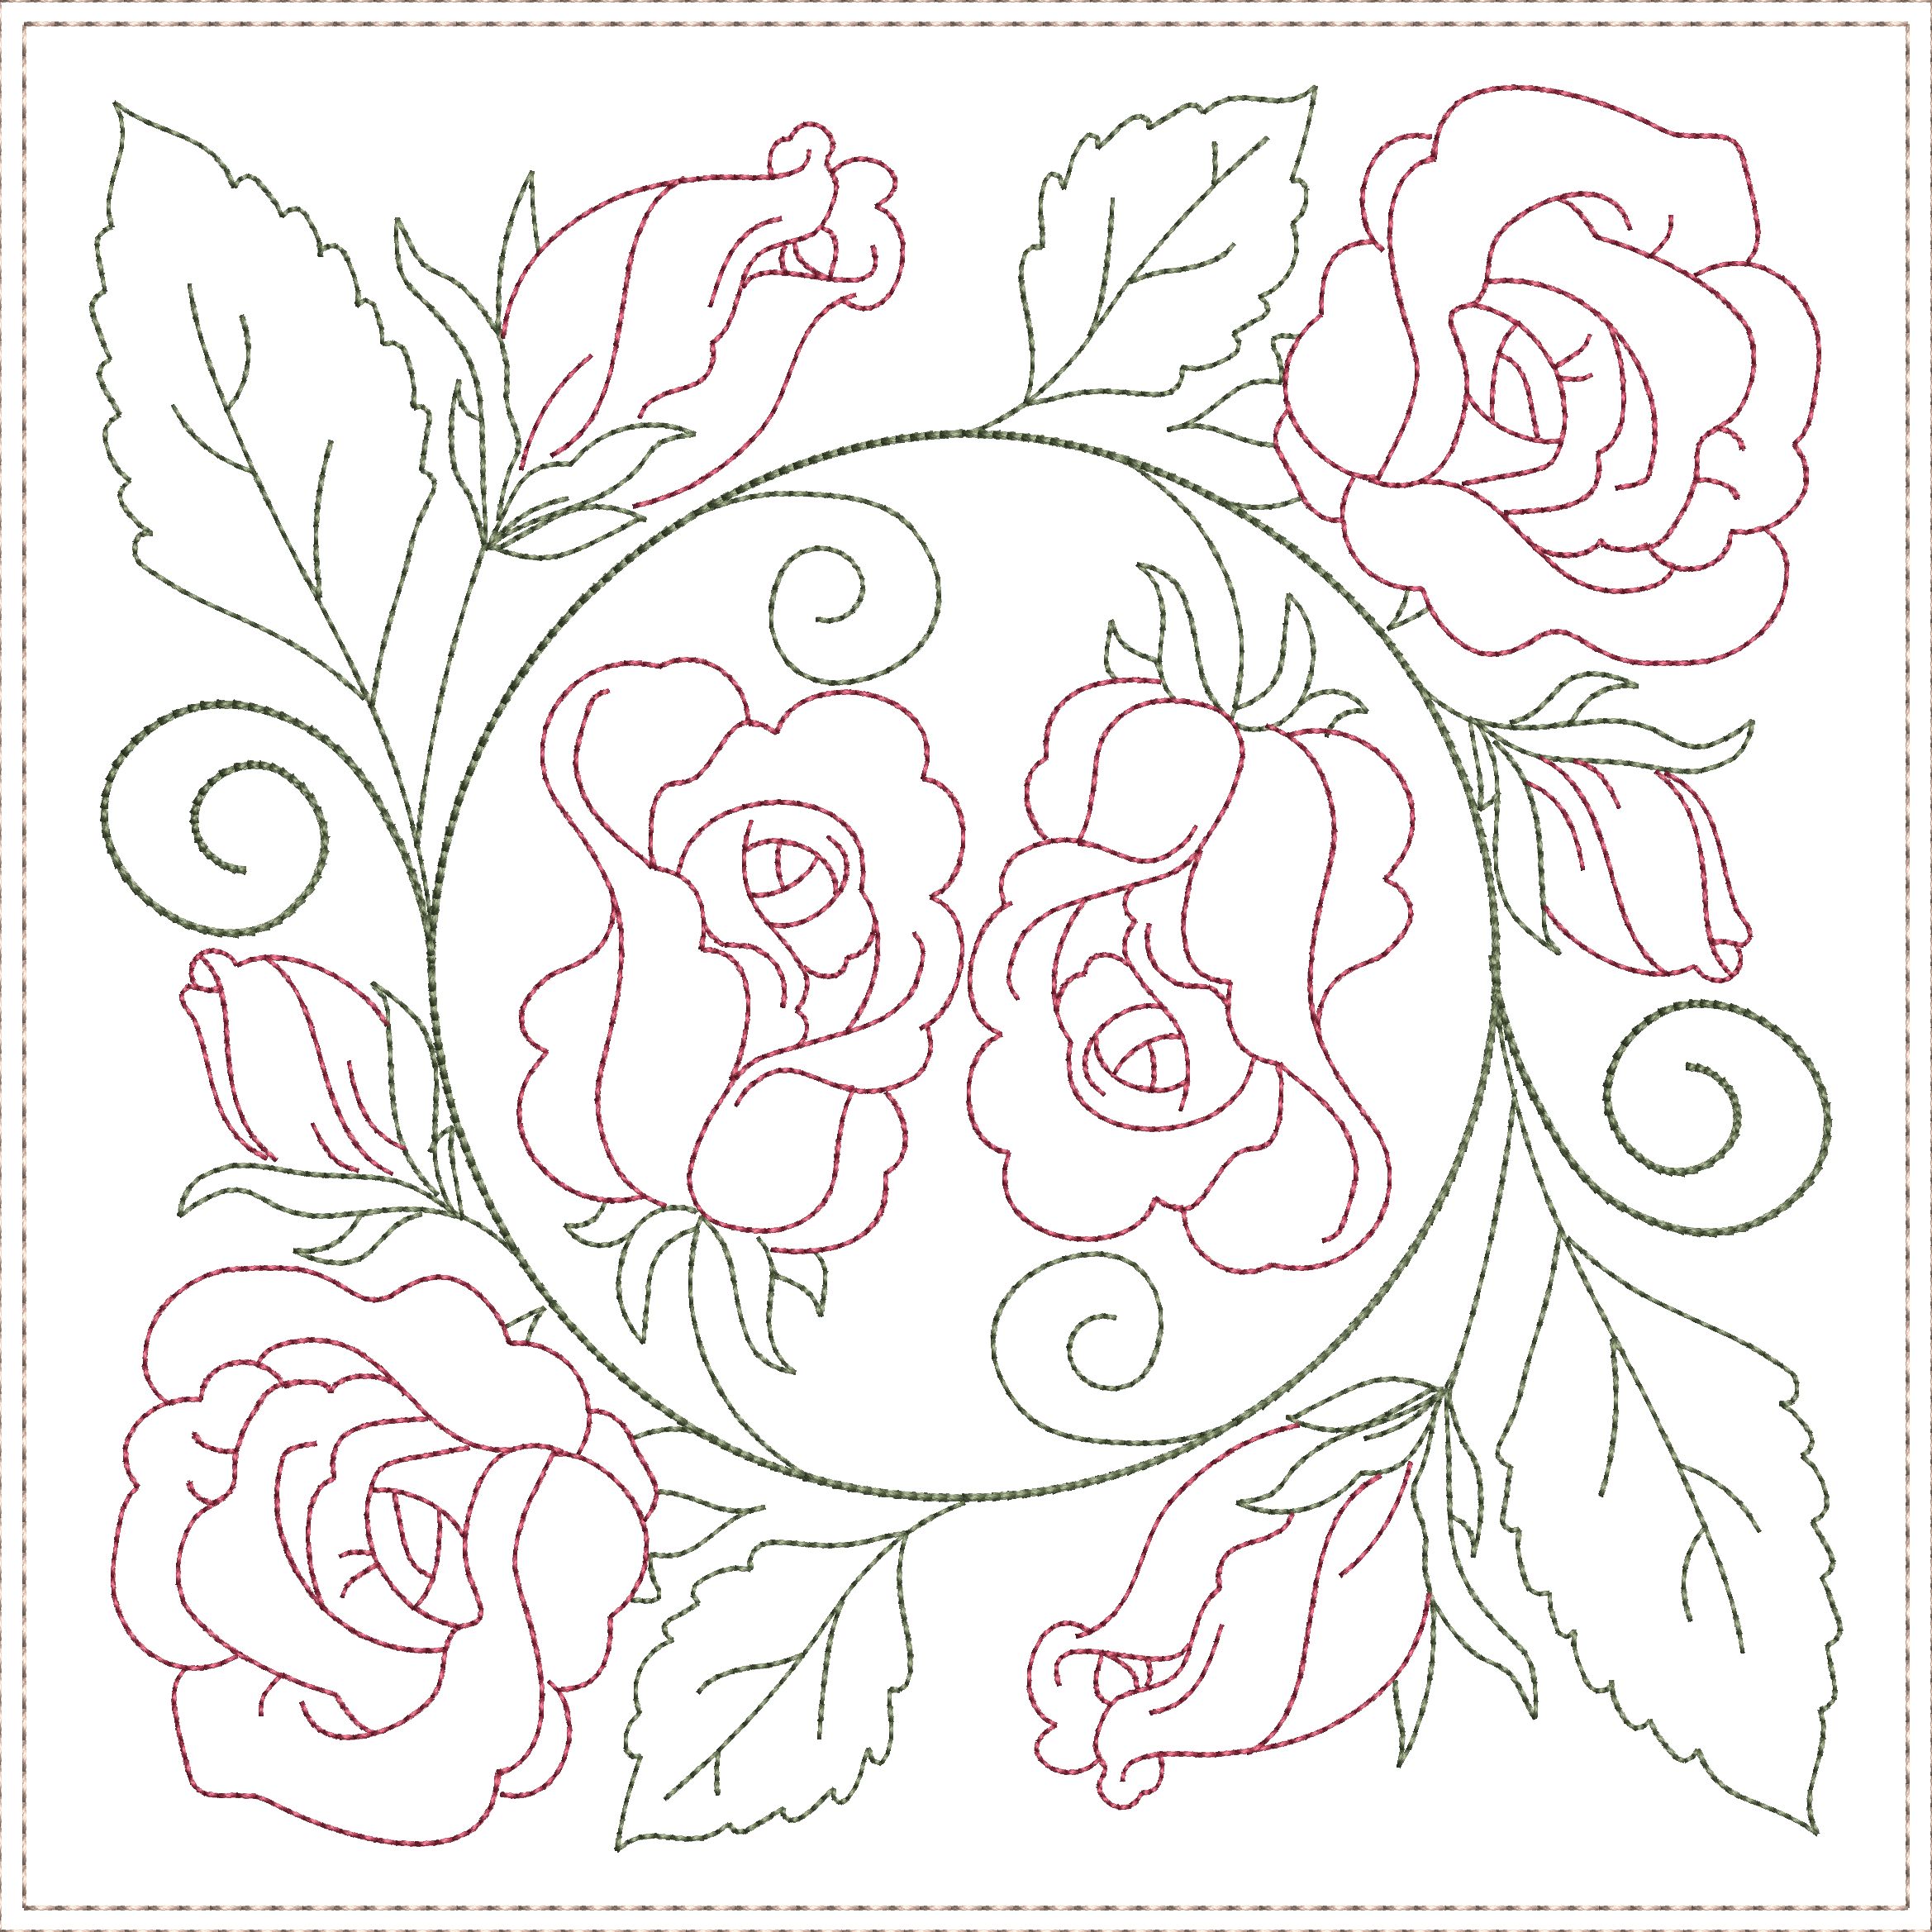 Circle of Roses-14